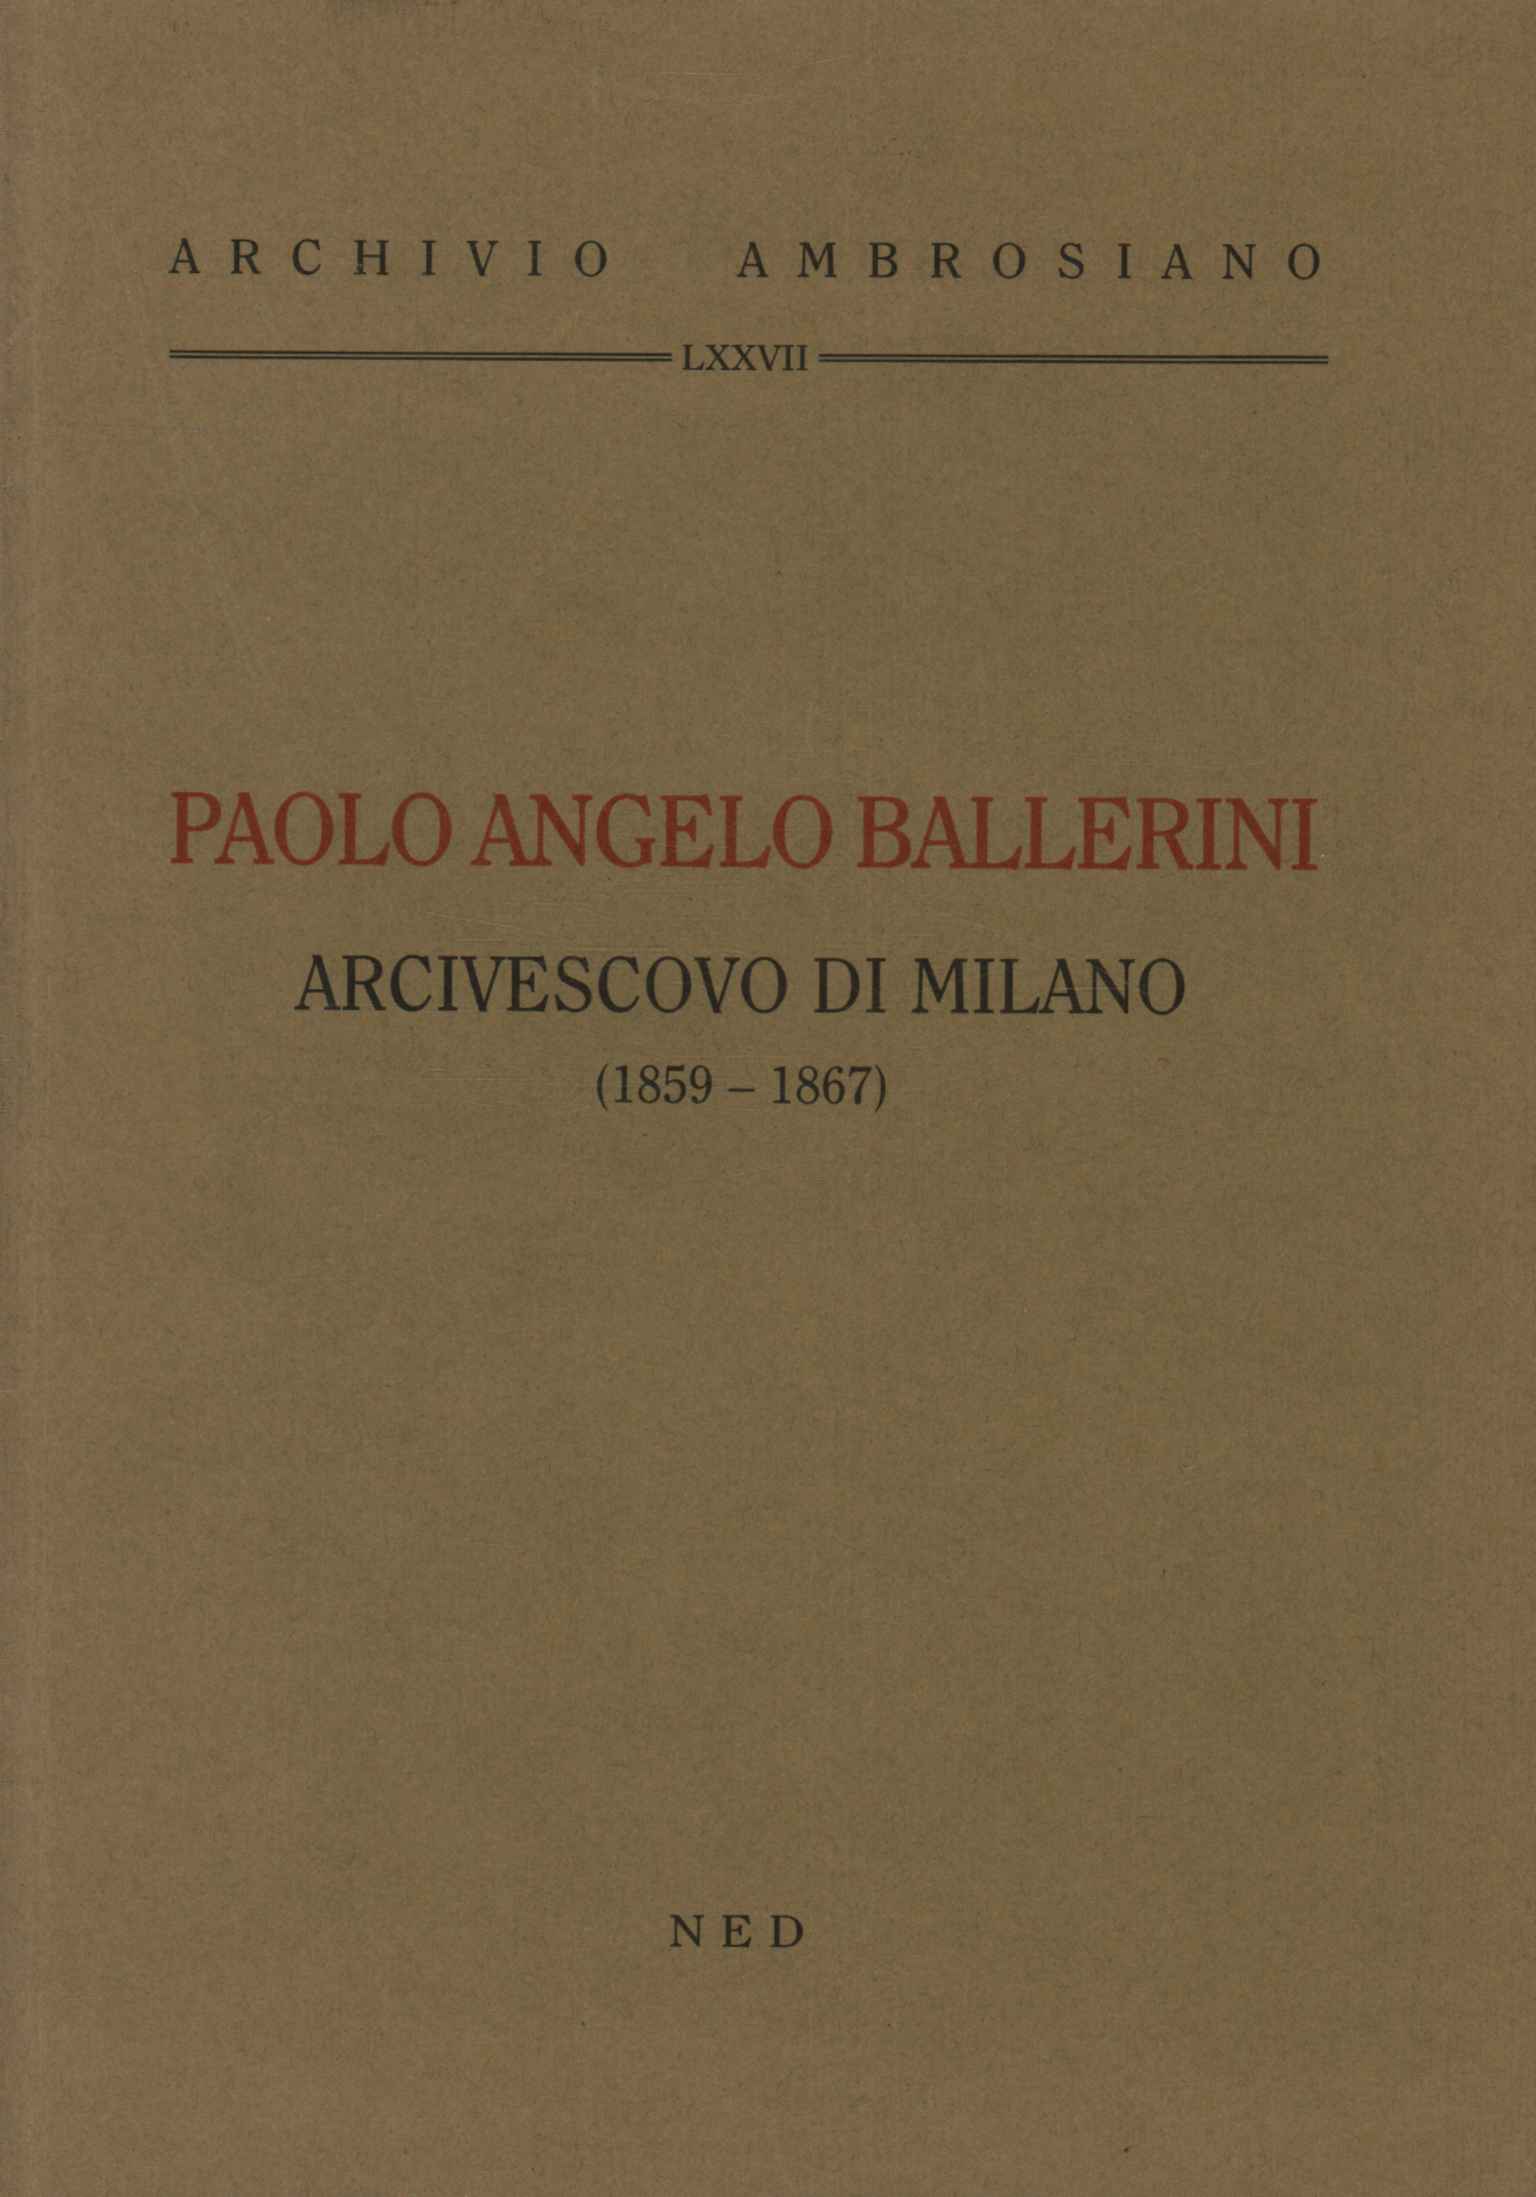 Paolo Angelo Ballerini